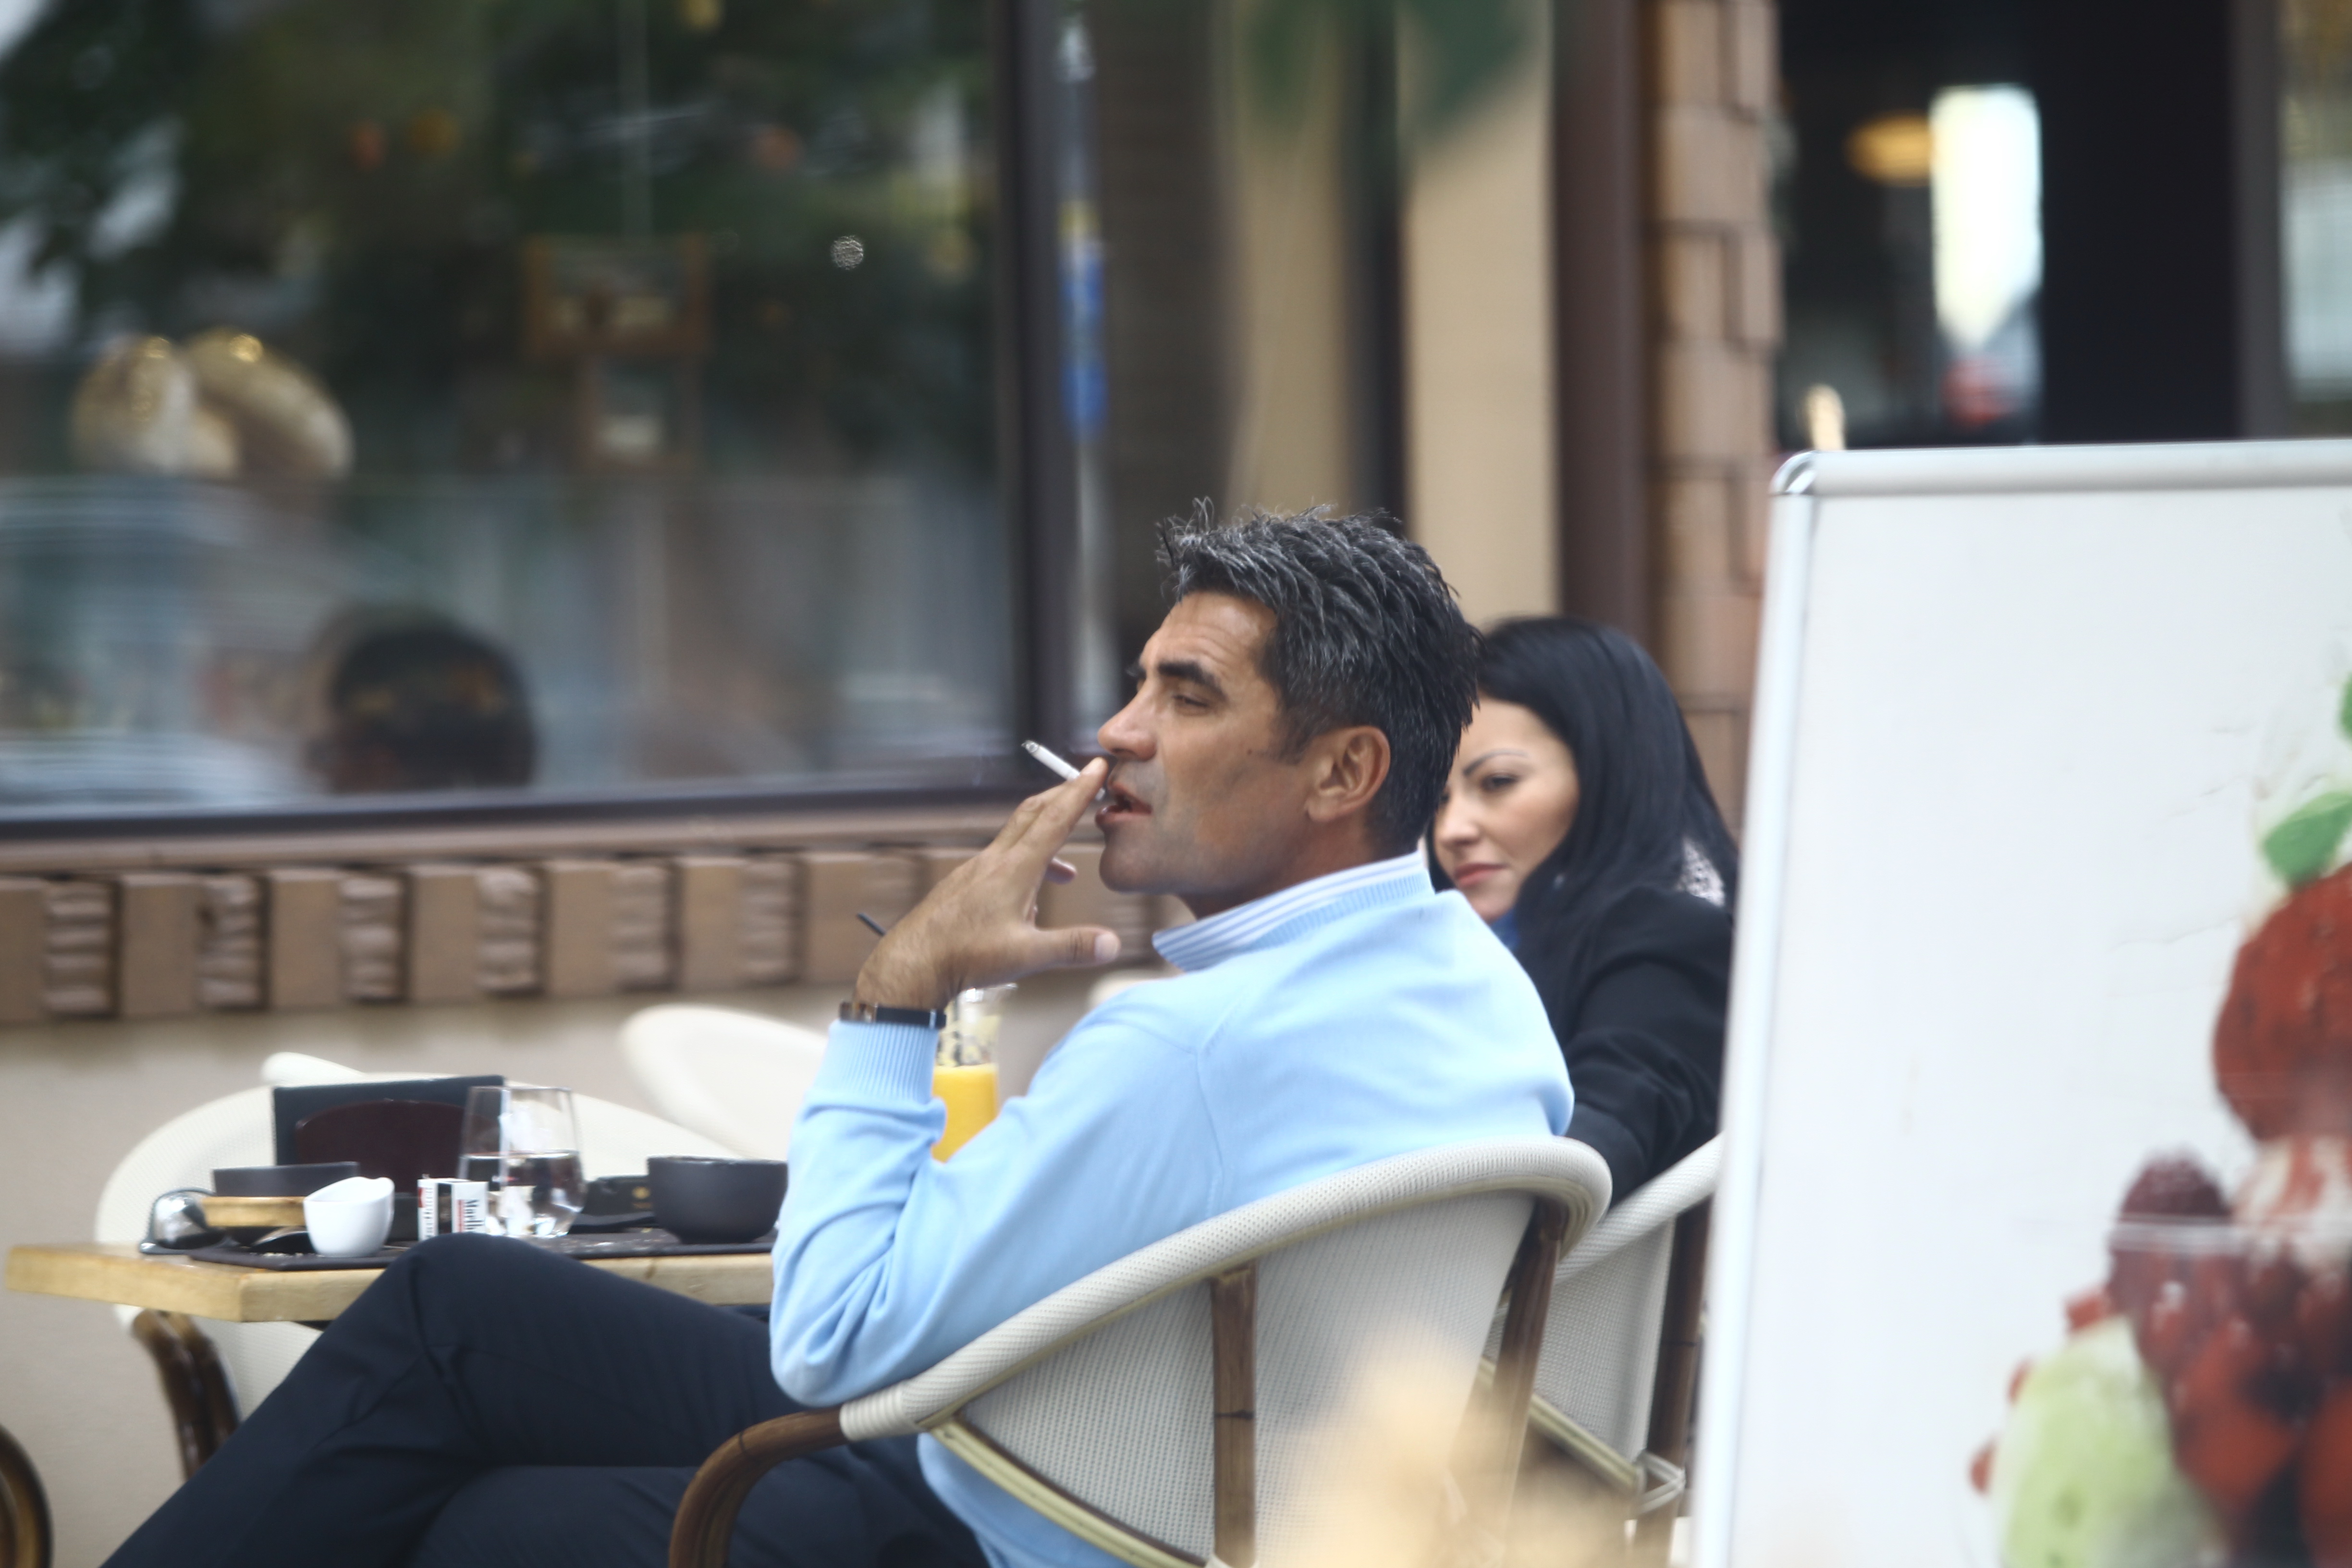 Marcel si tanara domnisoara au zabovit o ora la cafenea, timp in care afaceristul a fumat tigara dupa tigara